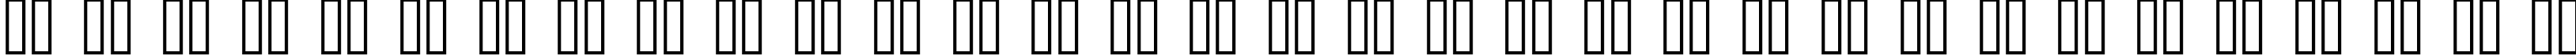 Пример написания русского алфавита шрифтом BorderMon  Series 1